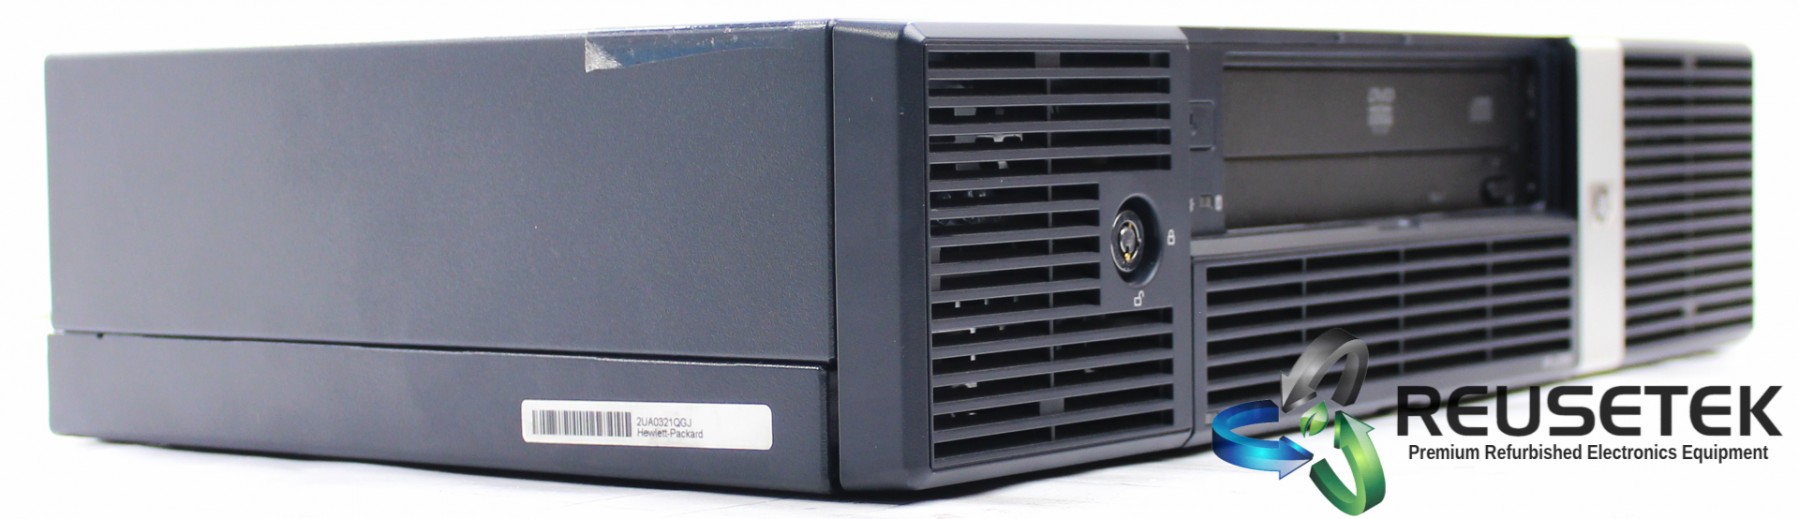 500031394-HP rp3000 POS Desktop PC-image